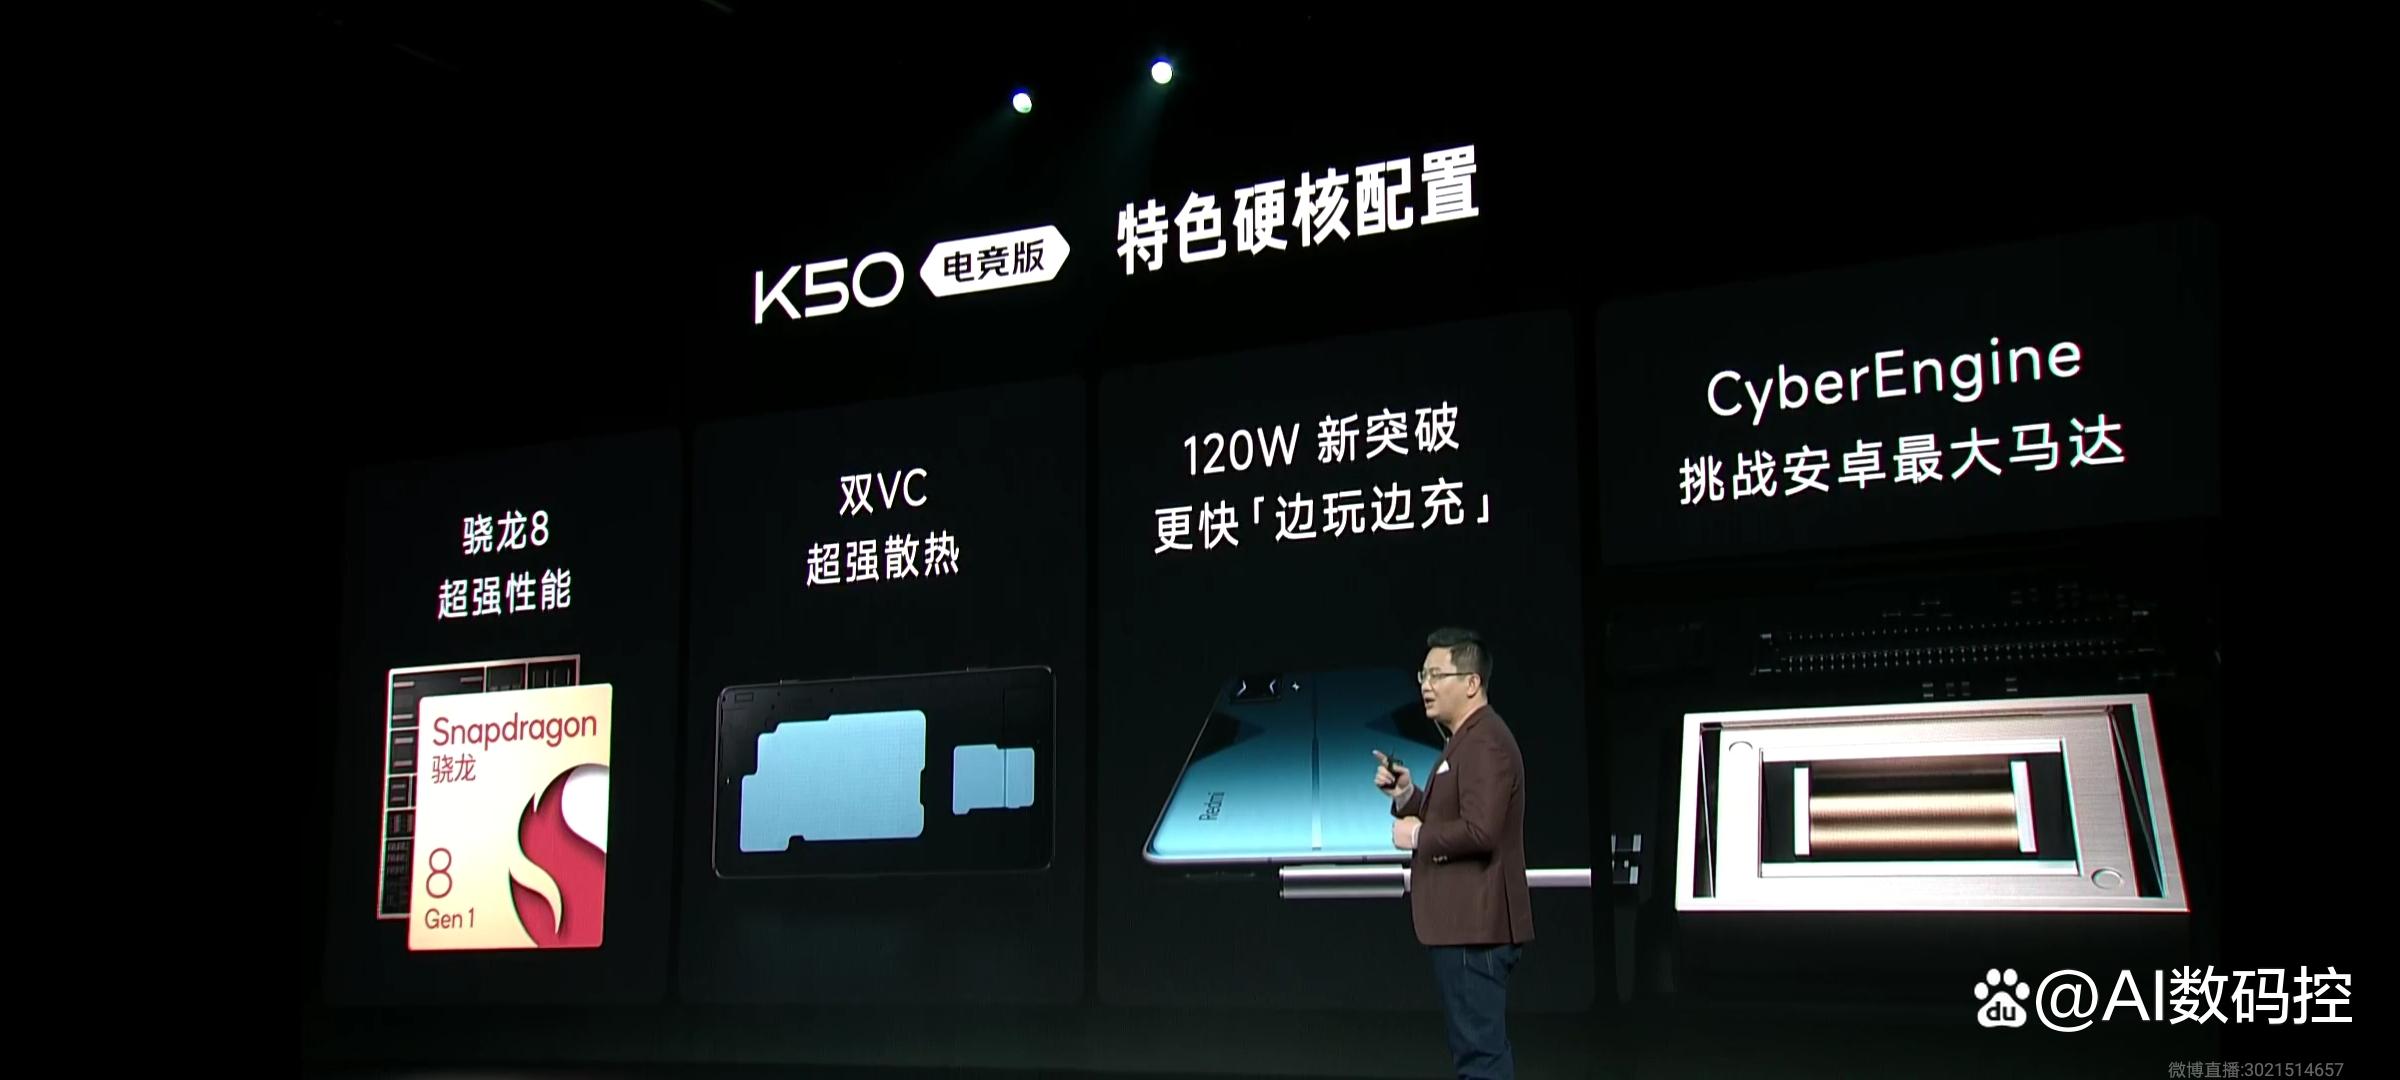 Redmi K50电竞版首销一分钟2.8亿元,到底卖了多少部手机?